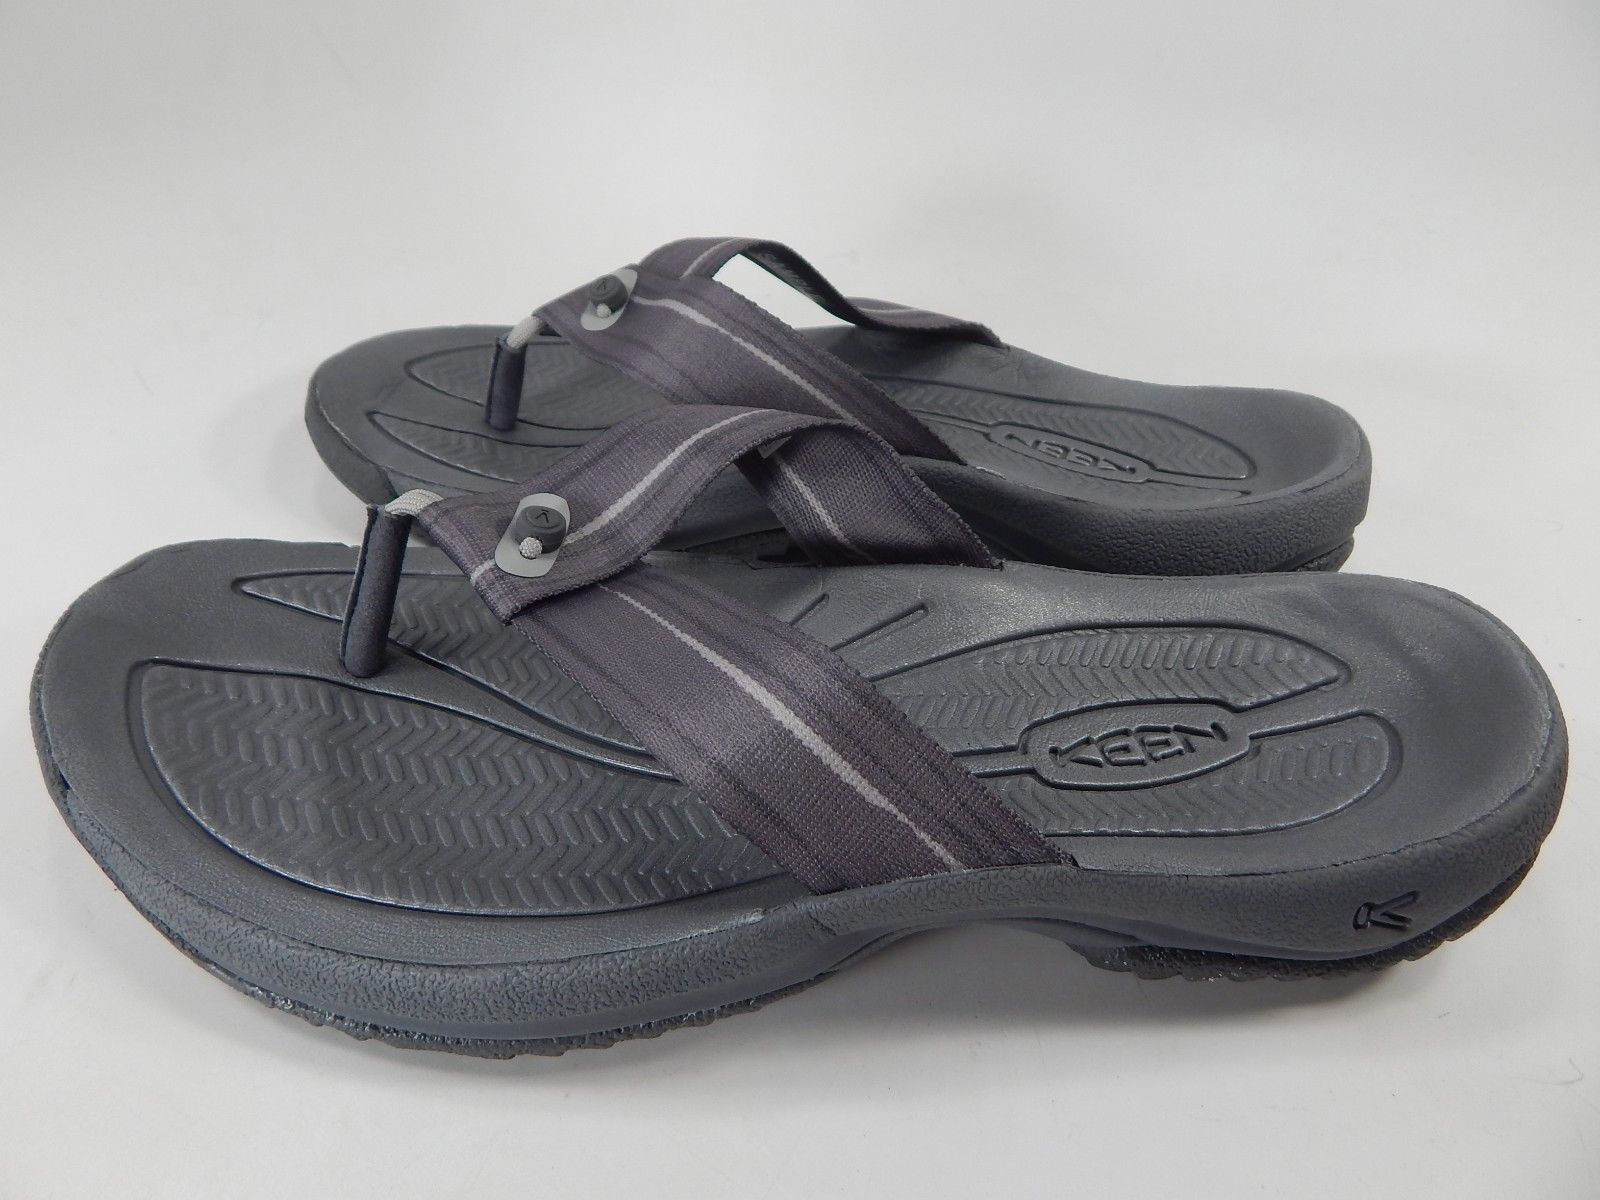 Keen Kona Flip Flop Slip On Sandals Men's Size US 9 M (D) EU 42 Gray ...